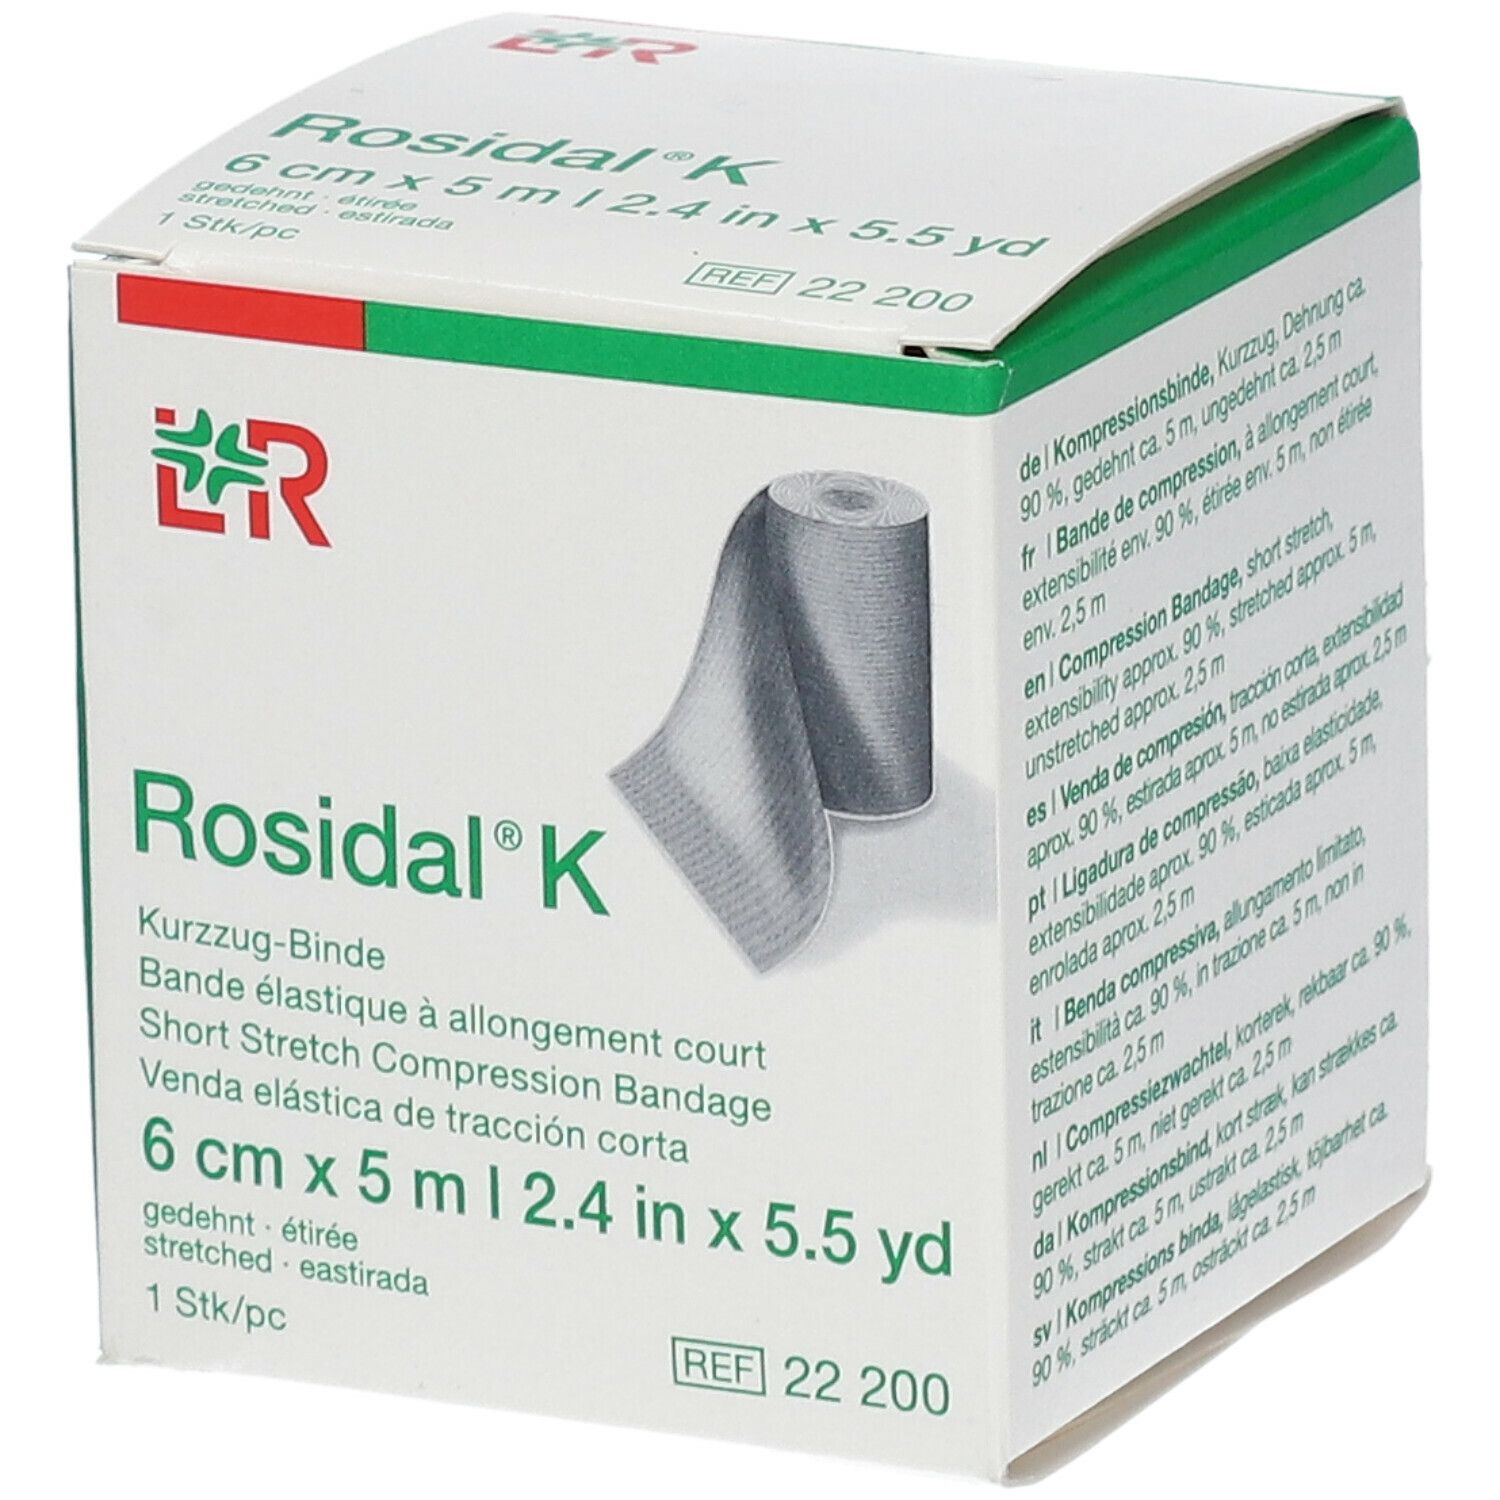 Rosidal® K Benda a Corta Estensione 6 cm x 5 m